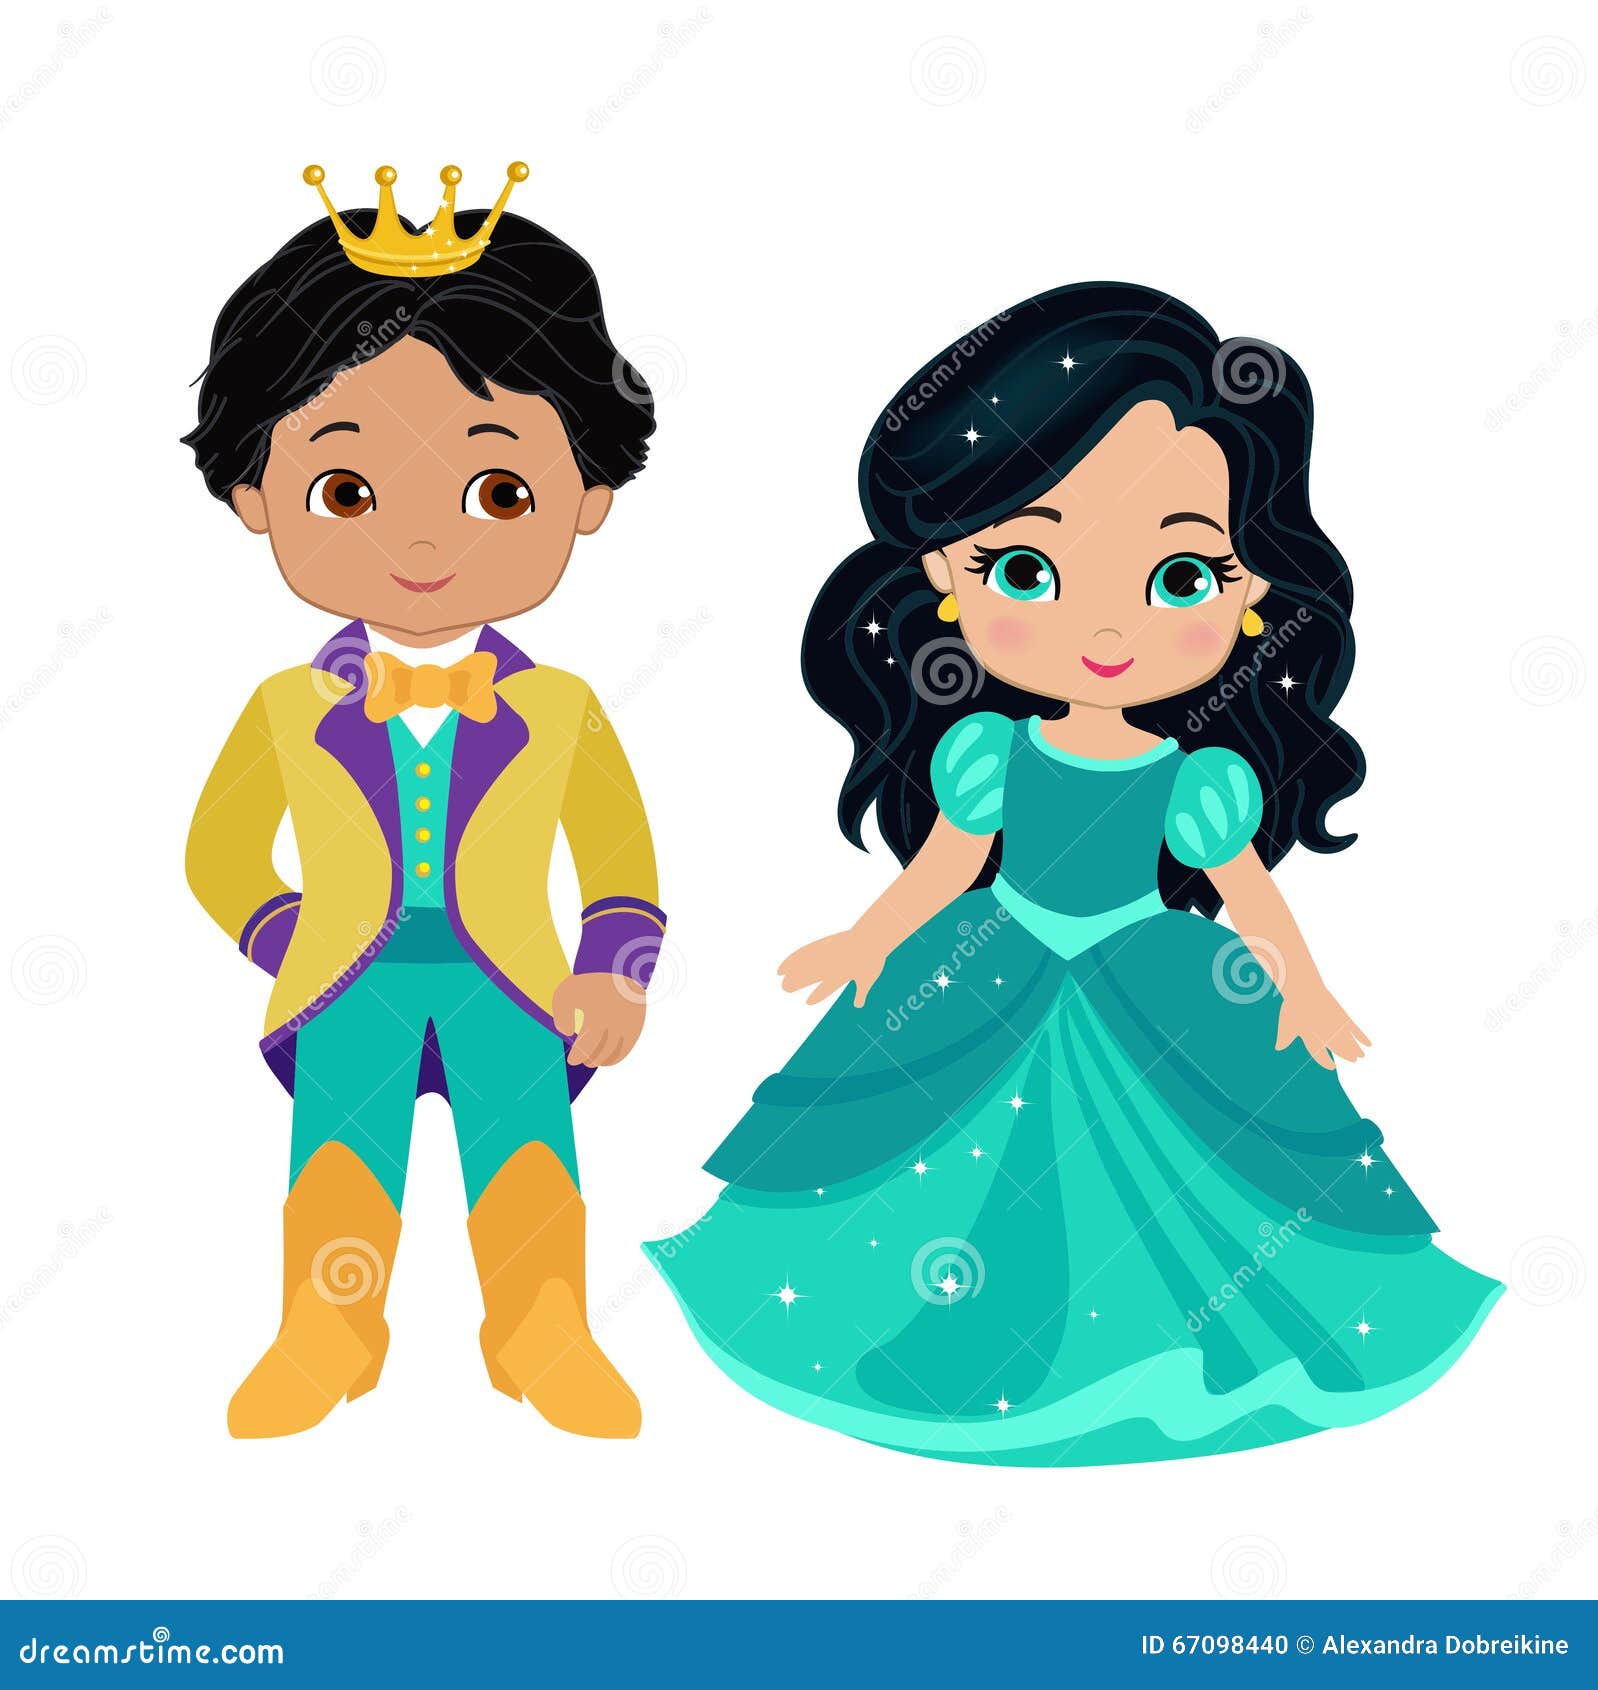 prince and princess clipart free - photo #18